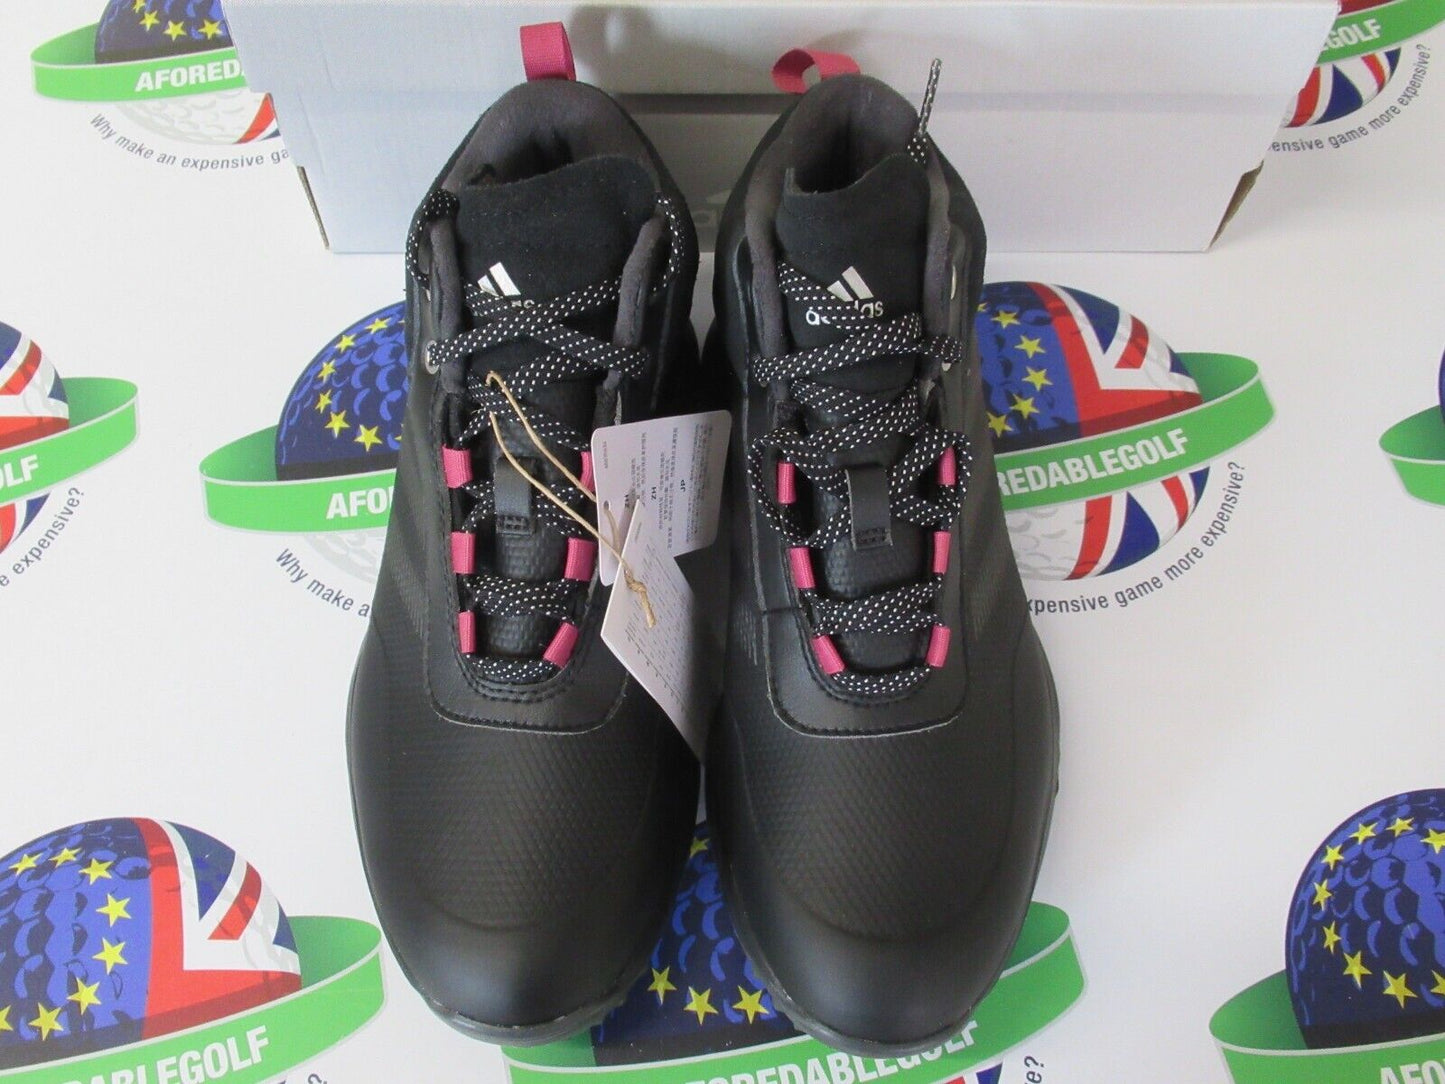 adidas womens s2g mid waterproof golf boots uk size 5.5 medium